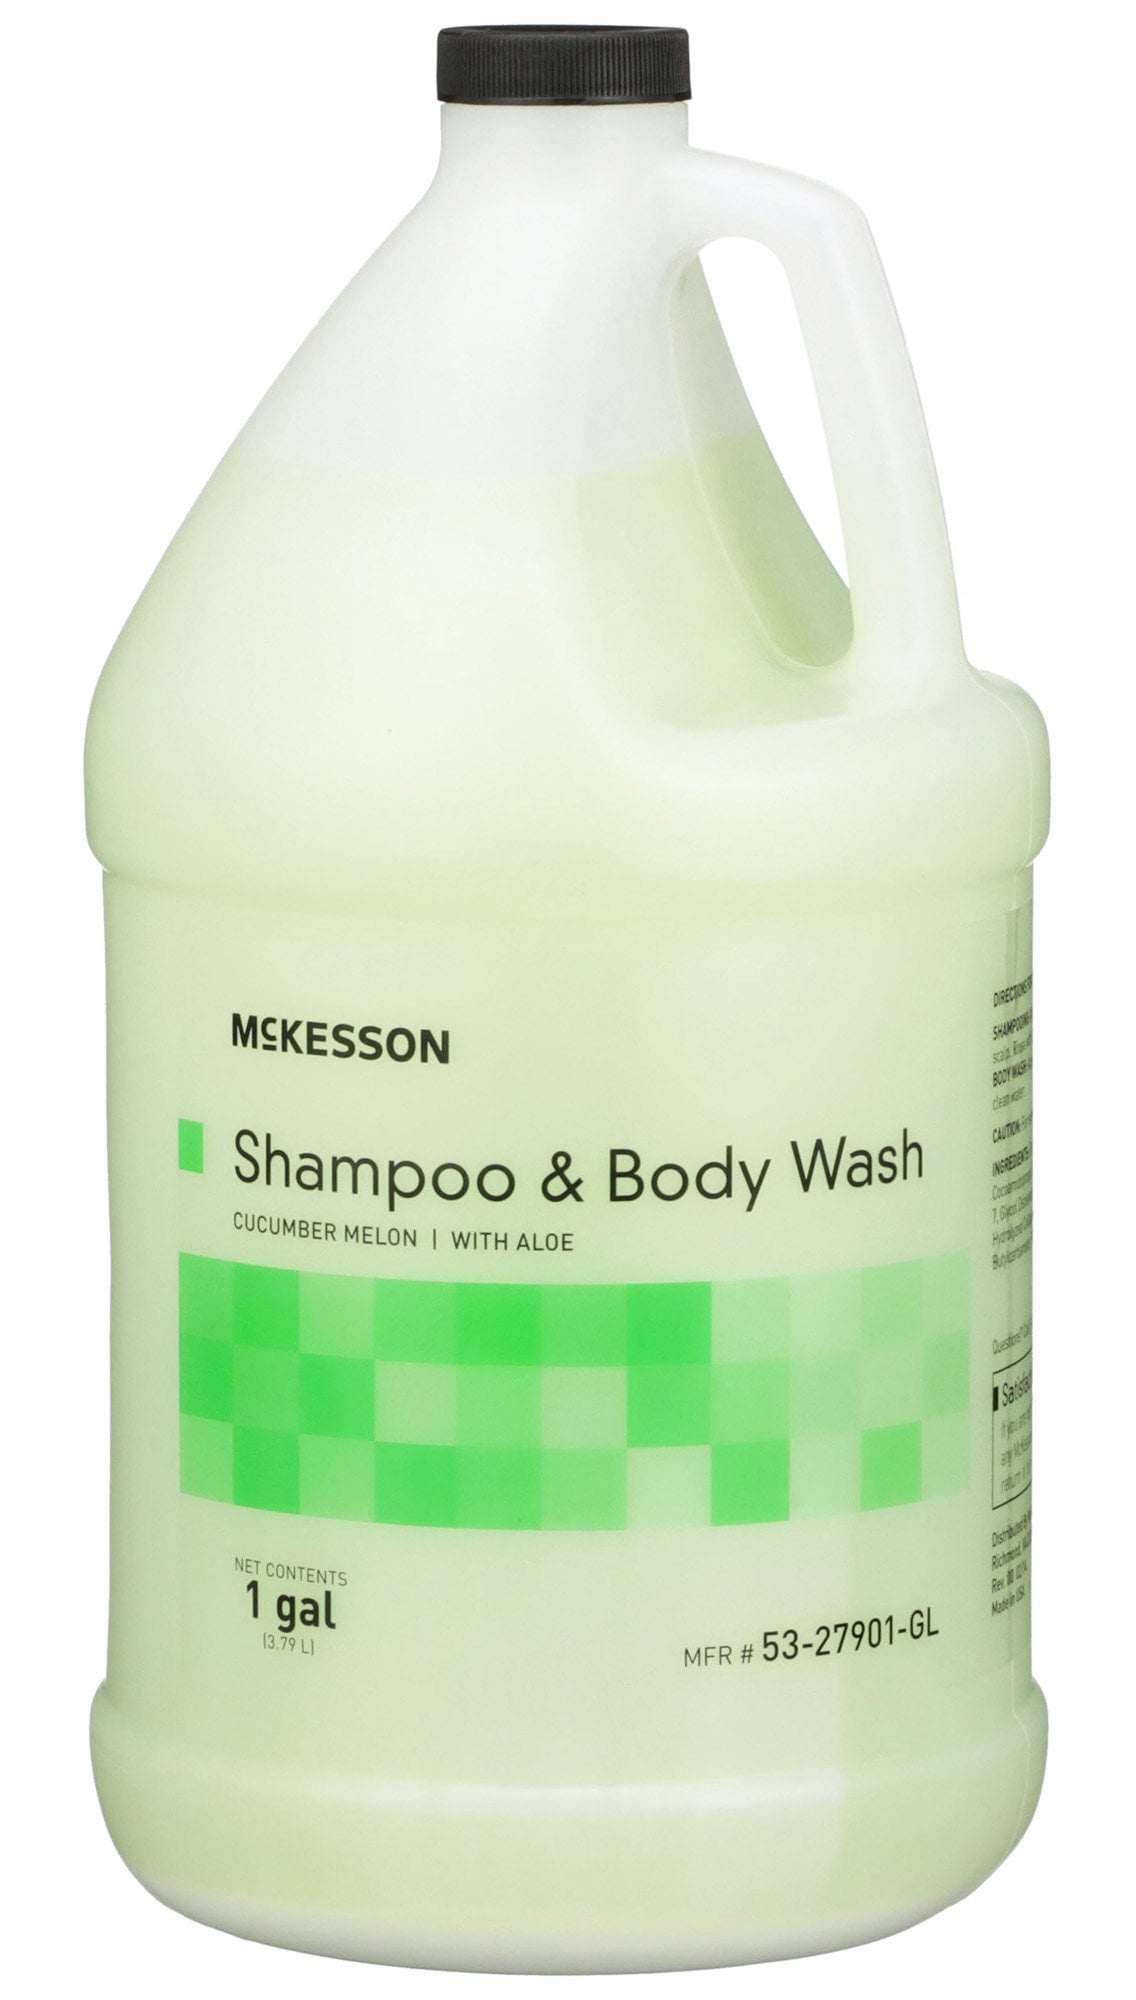 McKESSON Shampoo And Body Wash With Collagen - Cucumber Melon Scent